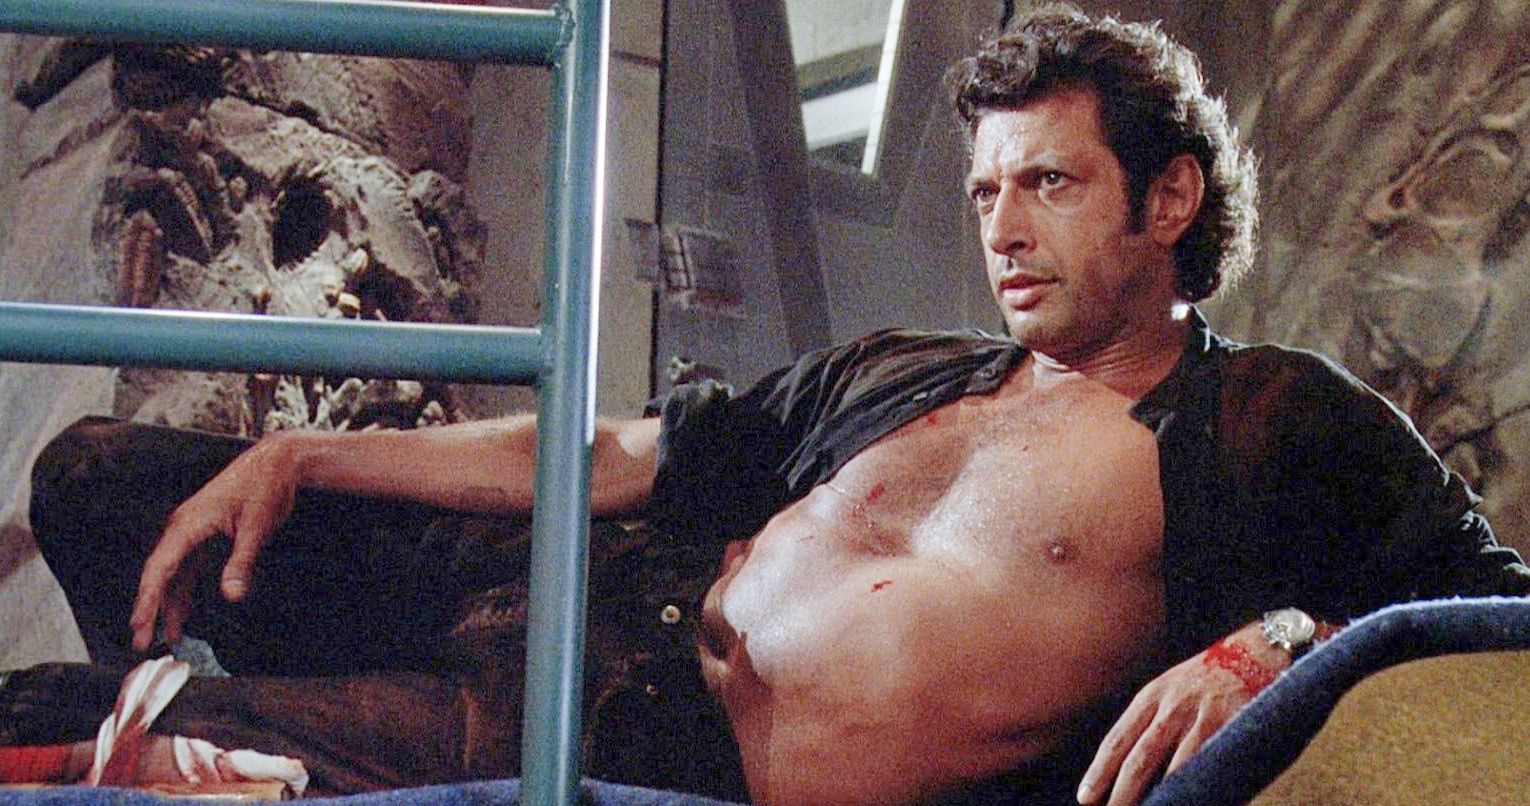 Jeff Goldblum Recreates Iconic Jurassic Park Shirtless Scene in New Photo